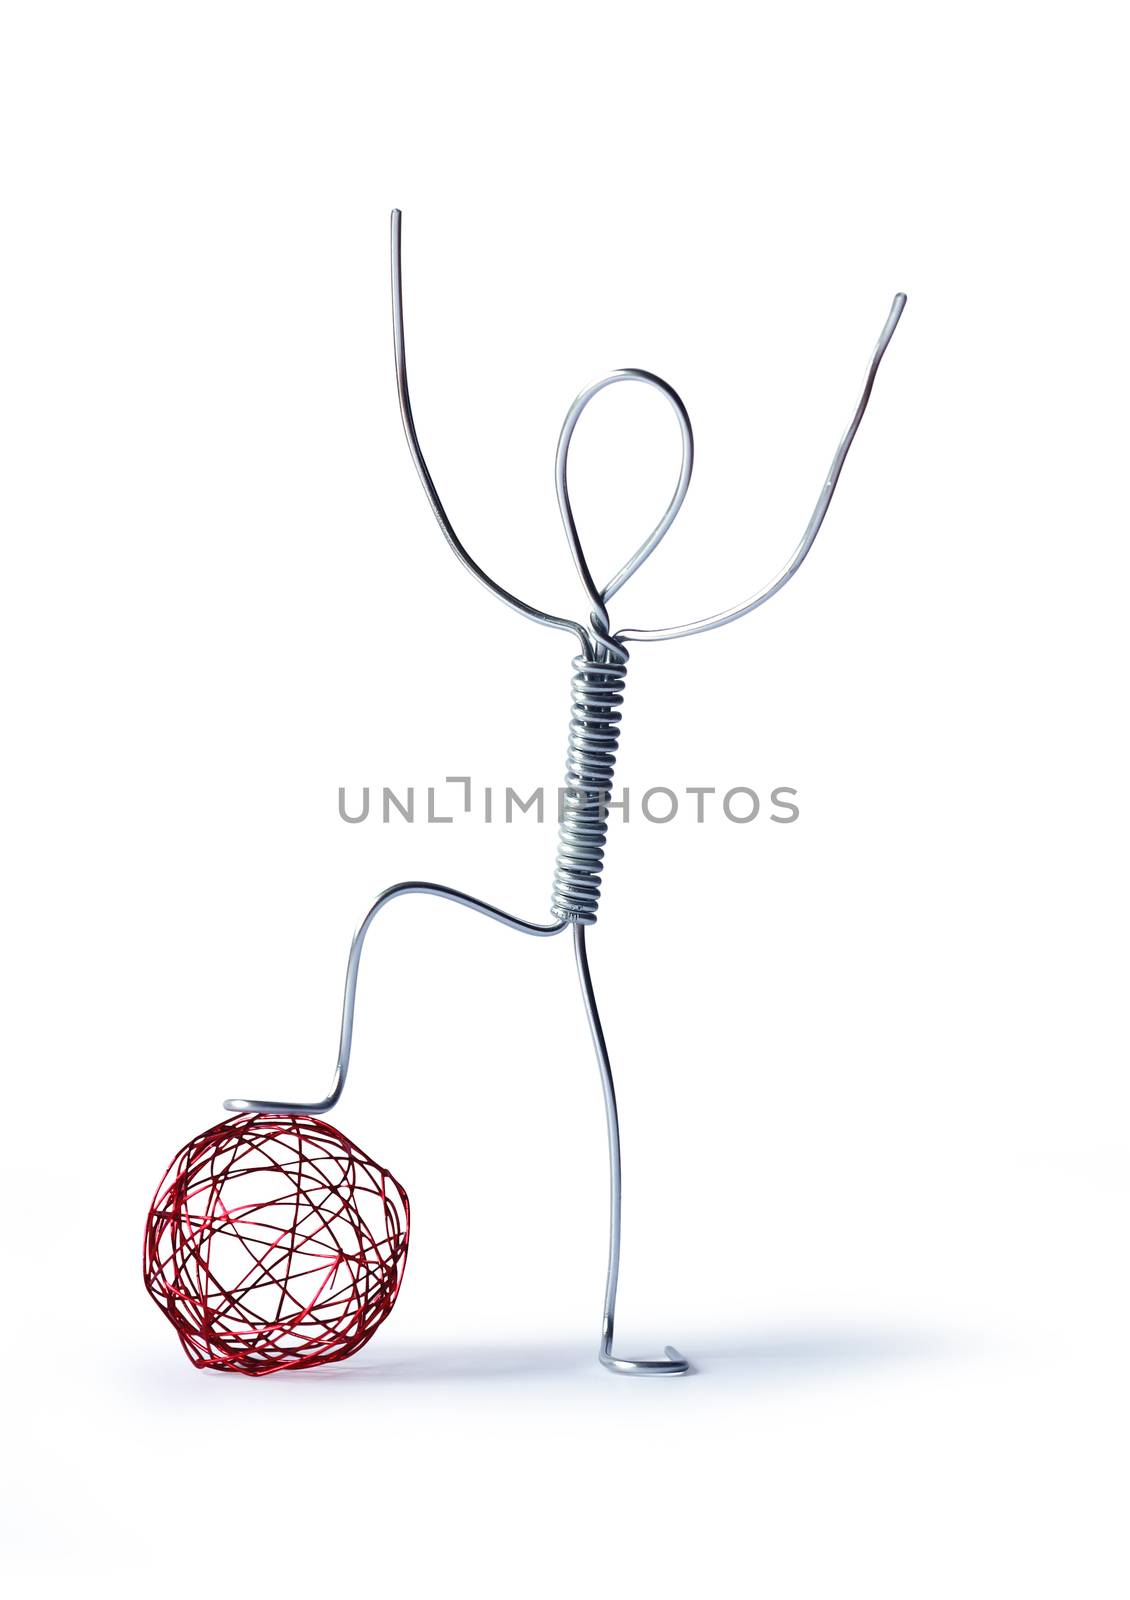 Football concept. Fun man made from aluminum wire near ball